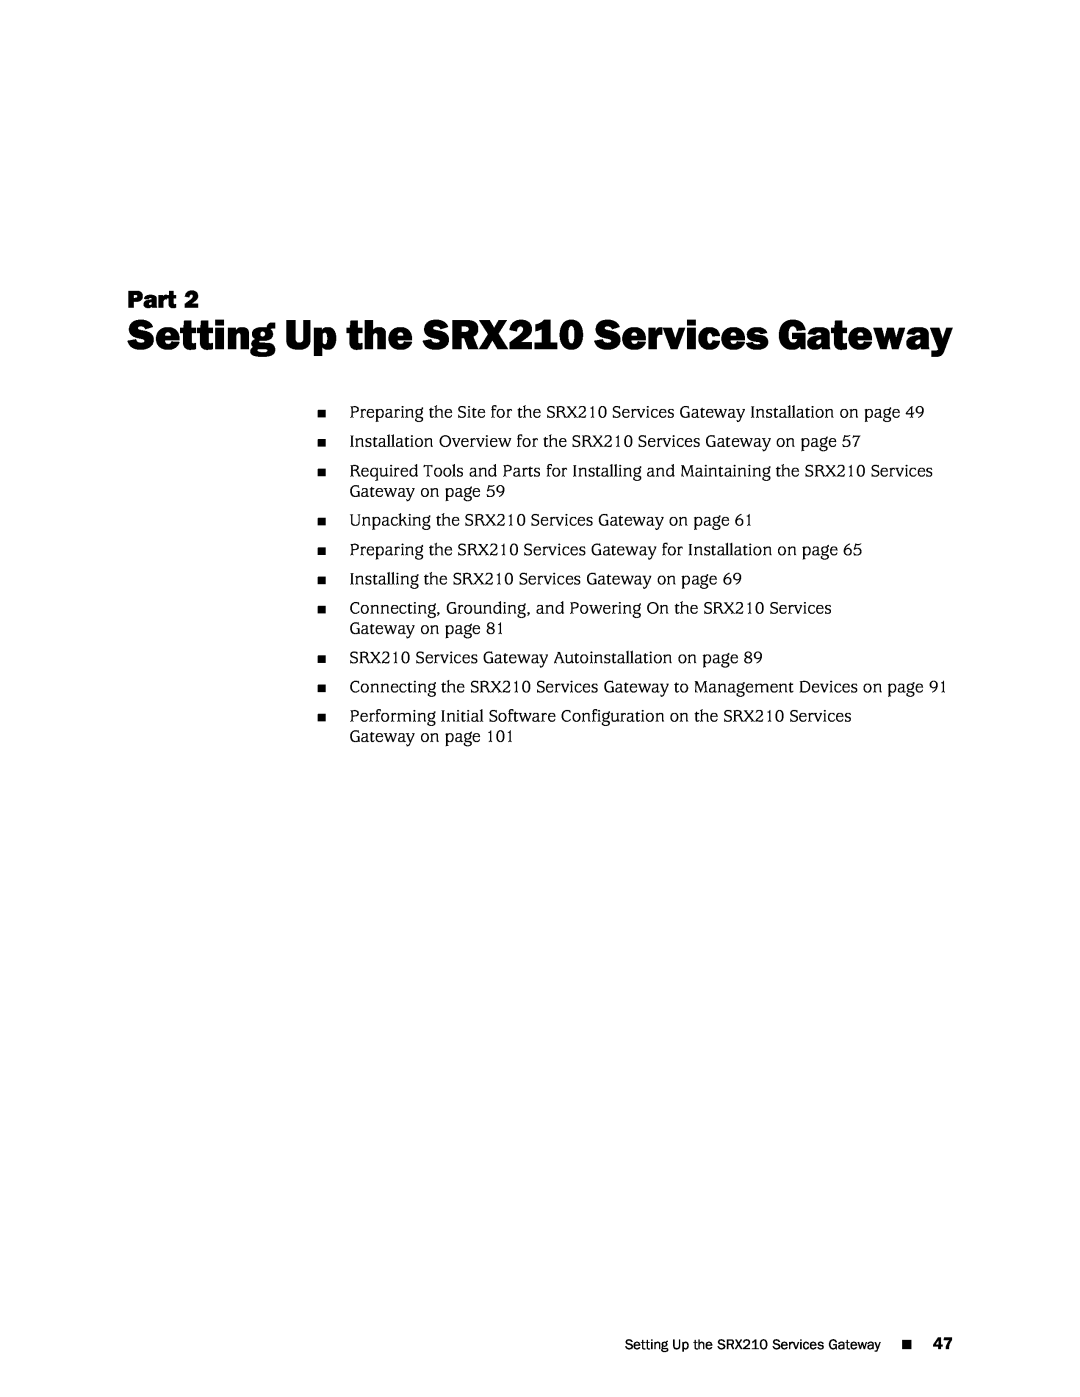 Juniper Networks SRX 210 manual Setting Up the SRX210 Services Gateway, Part 